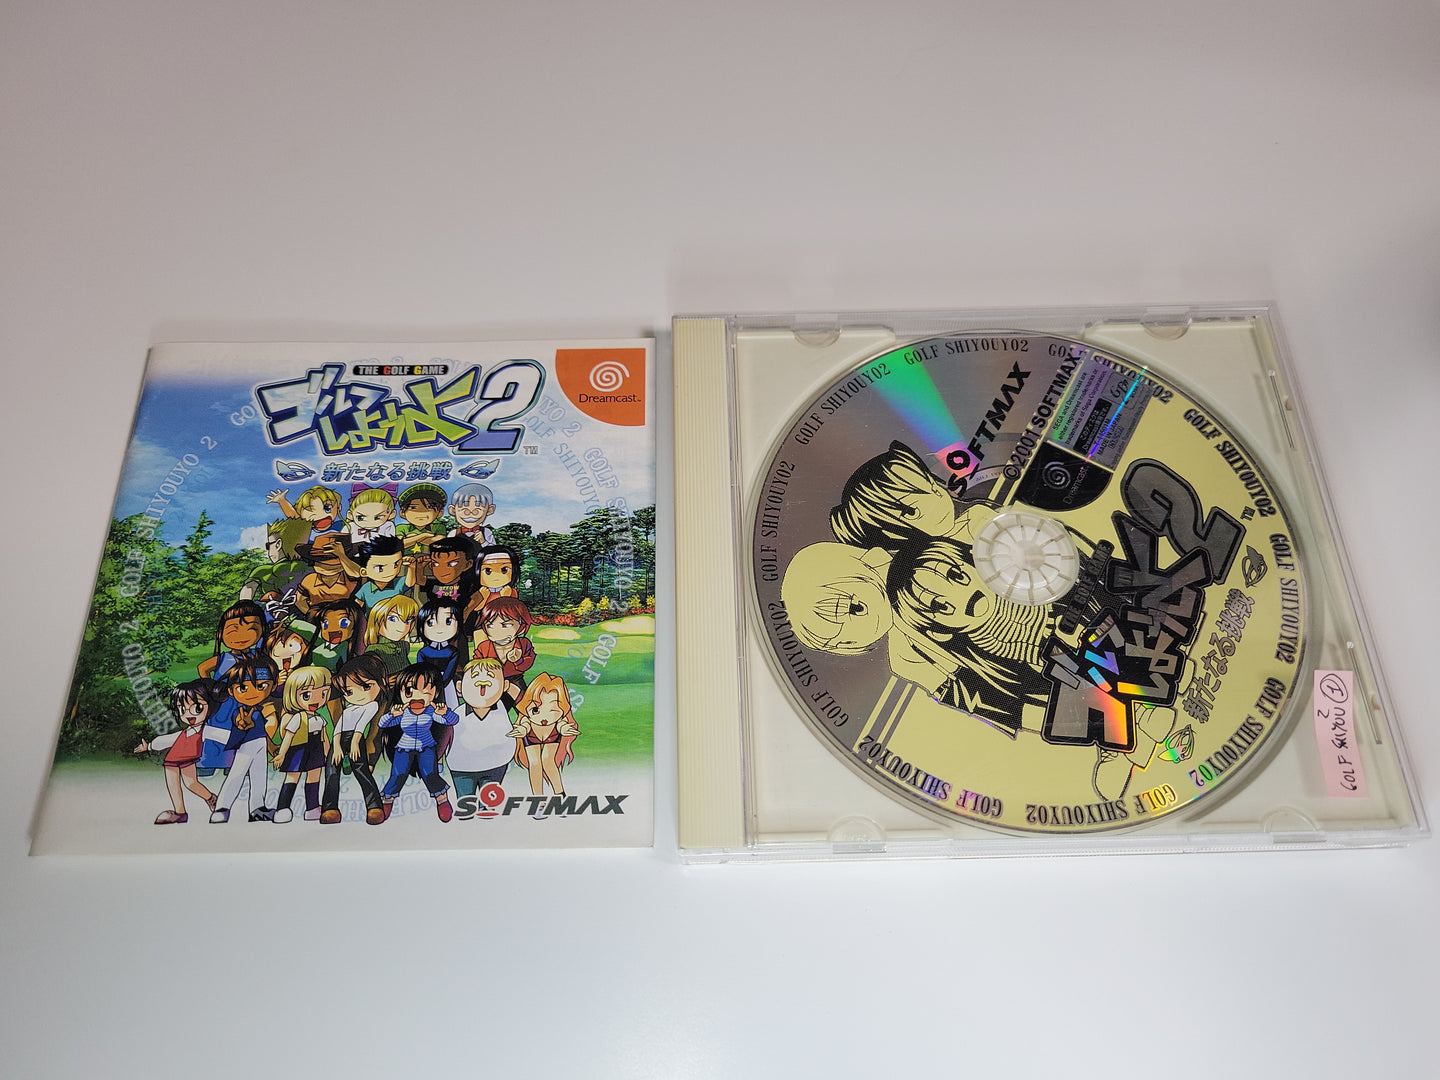 Golf Shiyouyo 2 - Sega dc Dreamcast